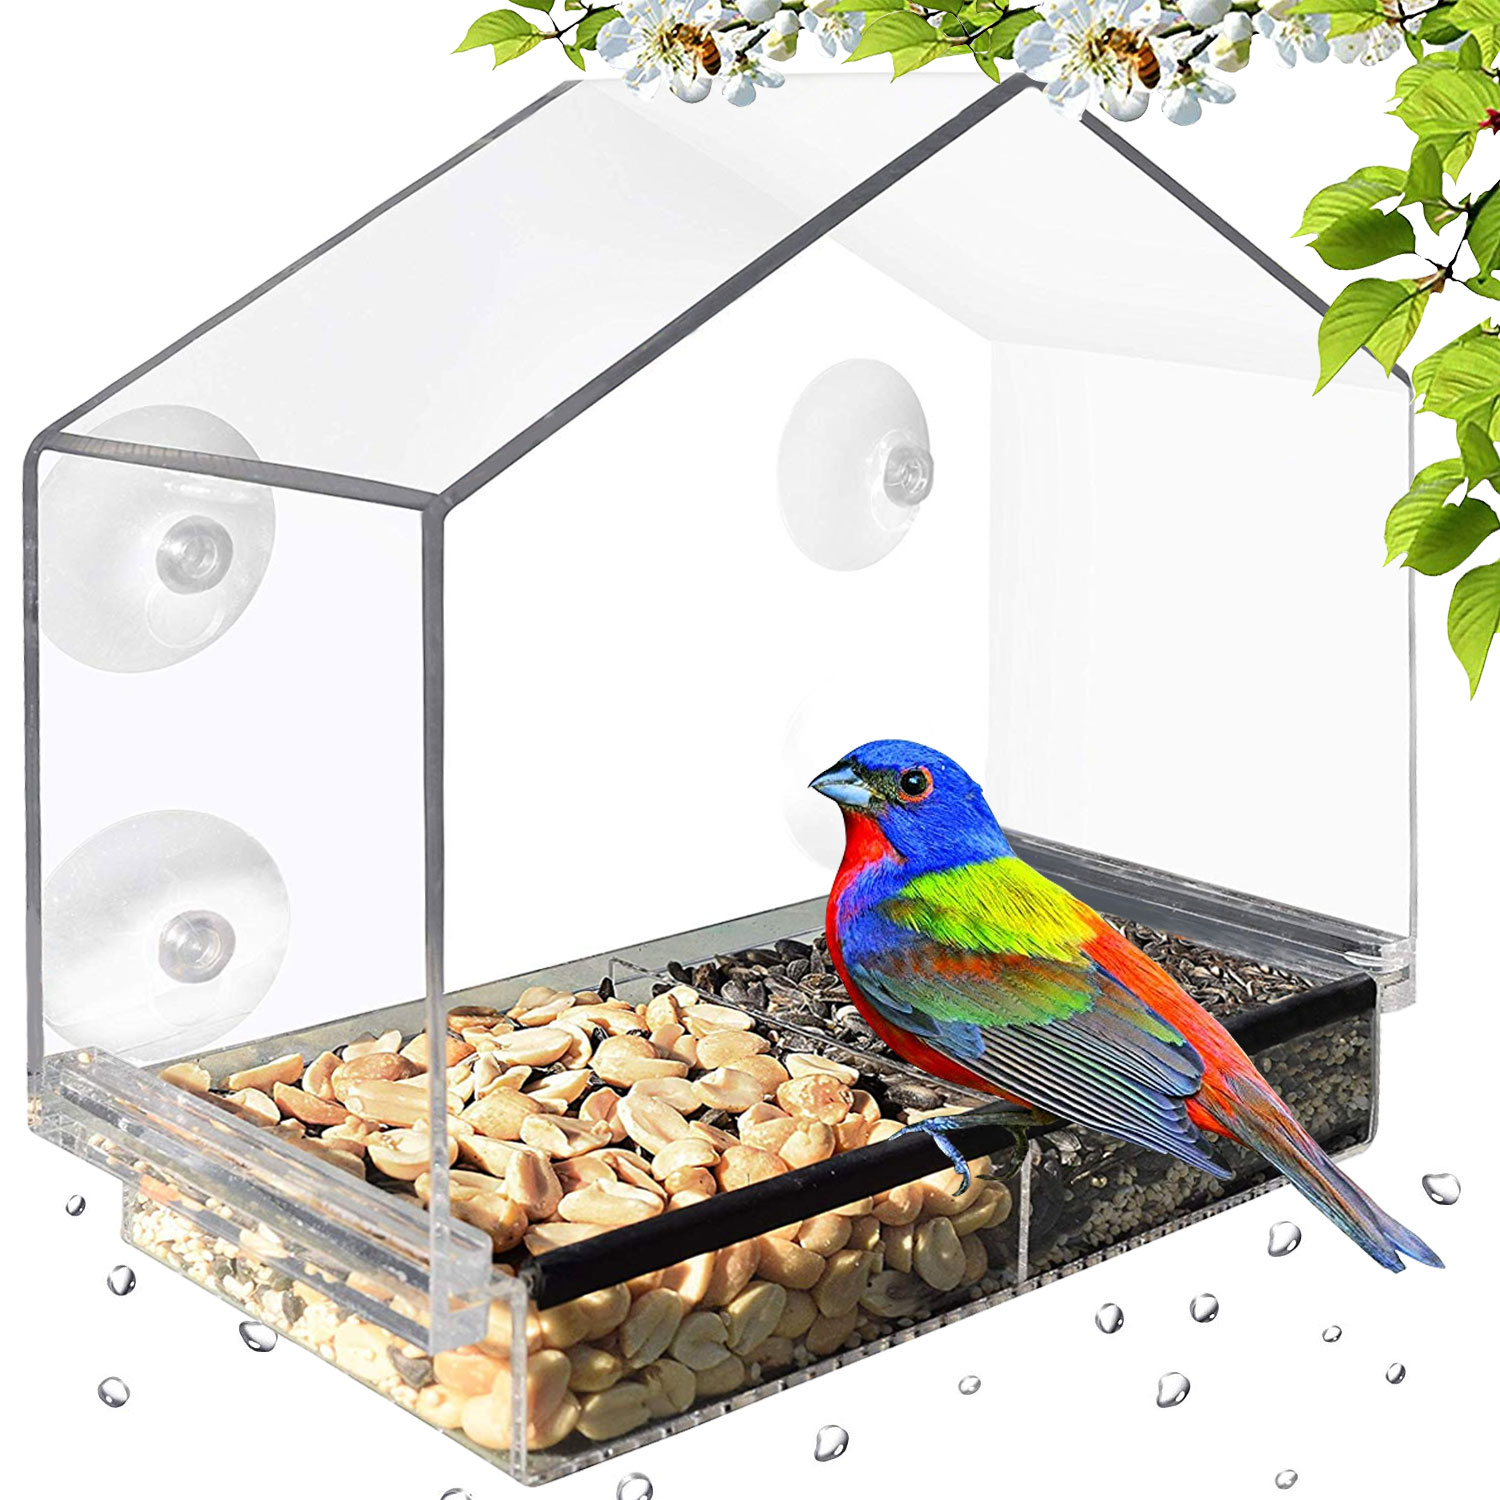 Unique Bird House Window Bird Feeders for Outdoor Clear Acrylic Birdfeeders Vent Dry for Wild Birds with Artificial Grassland